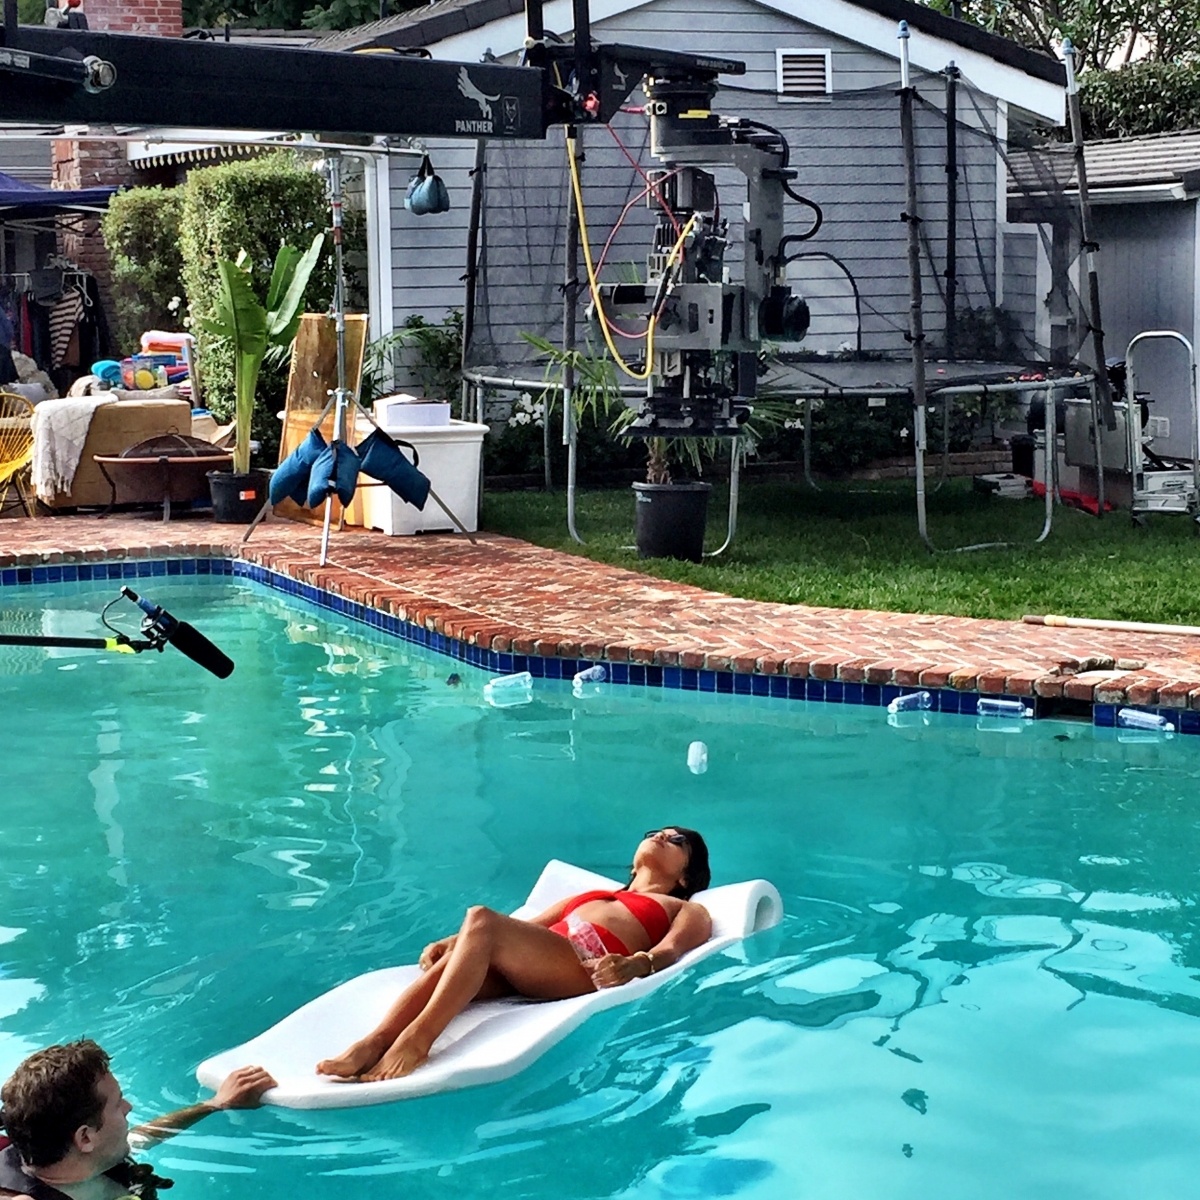 Mo-Sys Lambda filming scene at pool